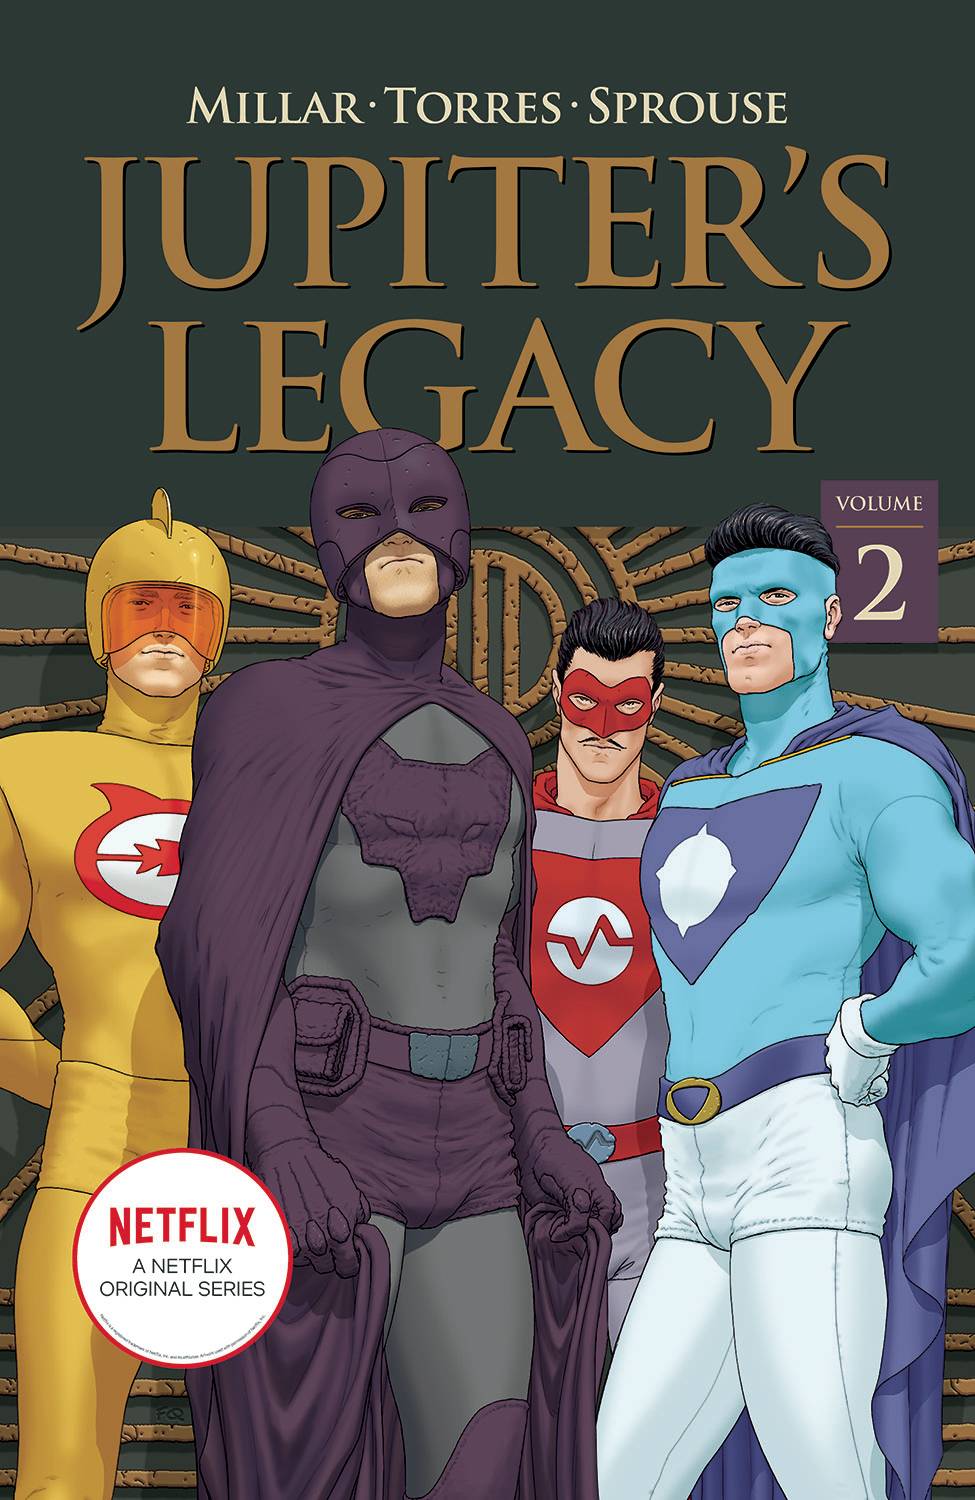 Jupiters Legacy Trade Paperback Soft Cover Volume 2 Netflix Edition